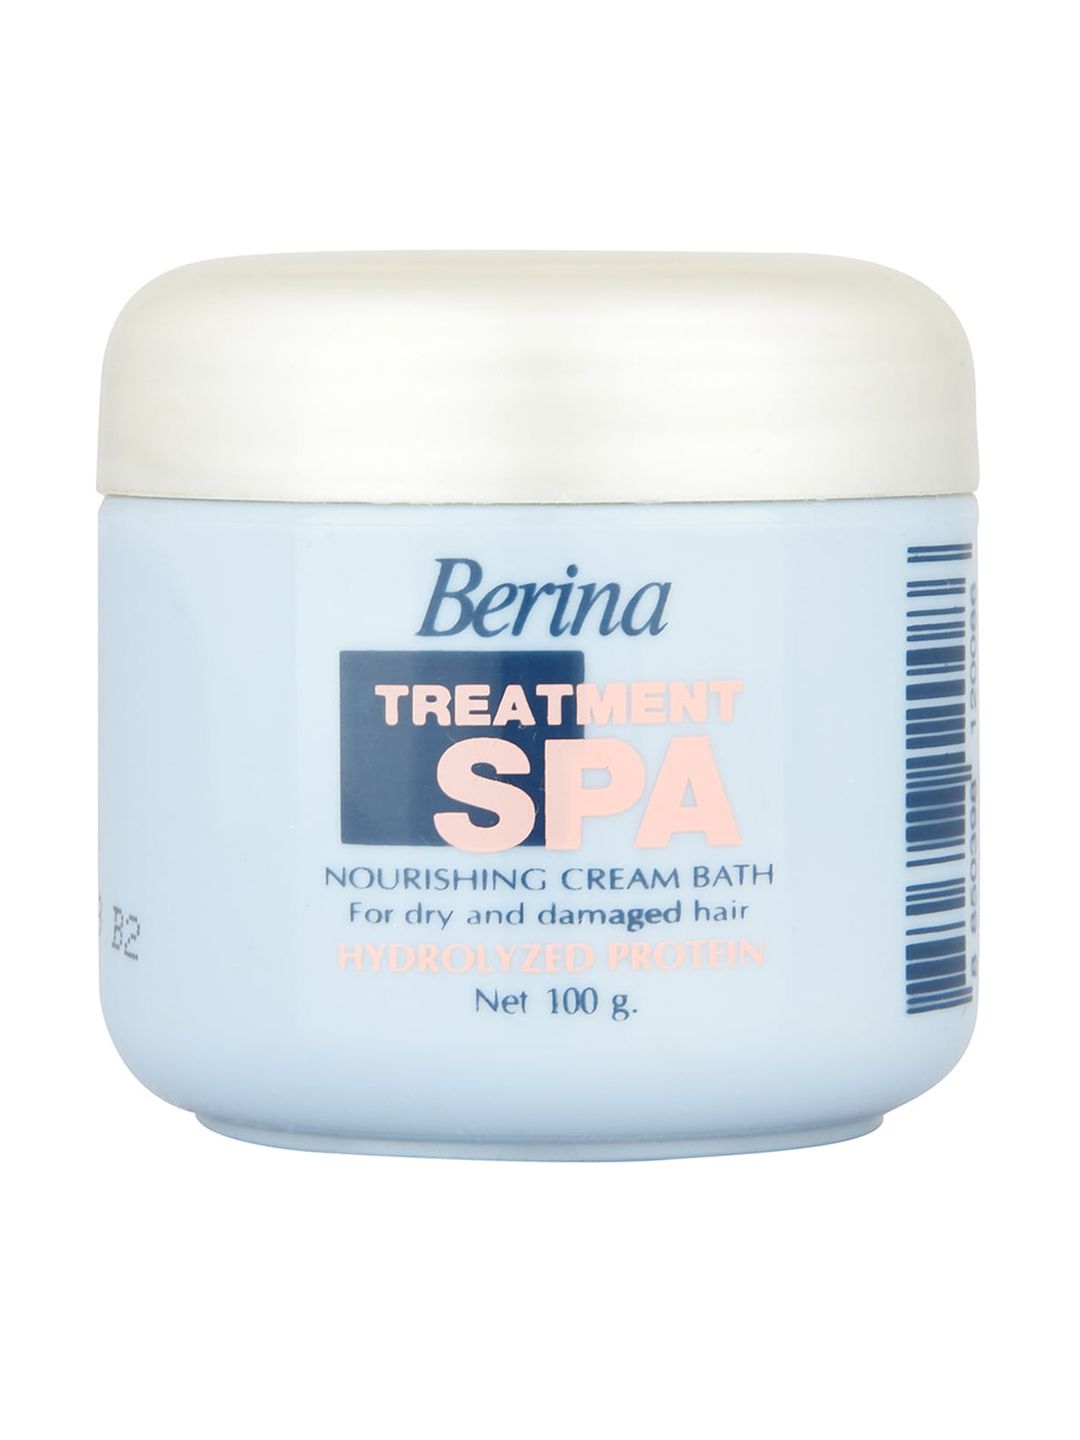 Berina Hair Treatment Spa 100g Price in India